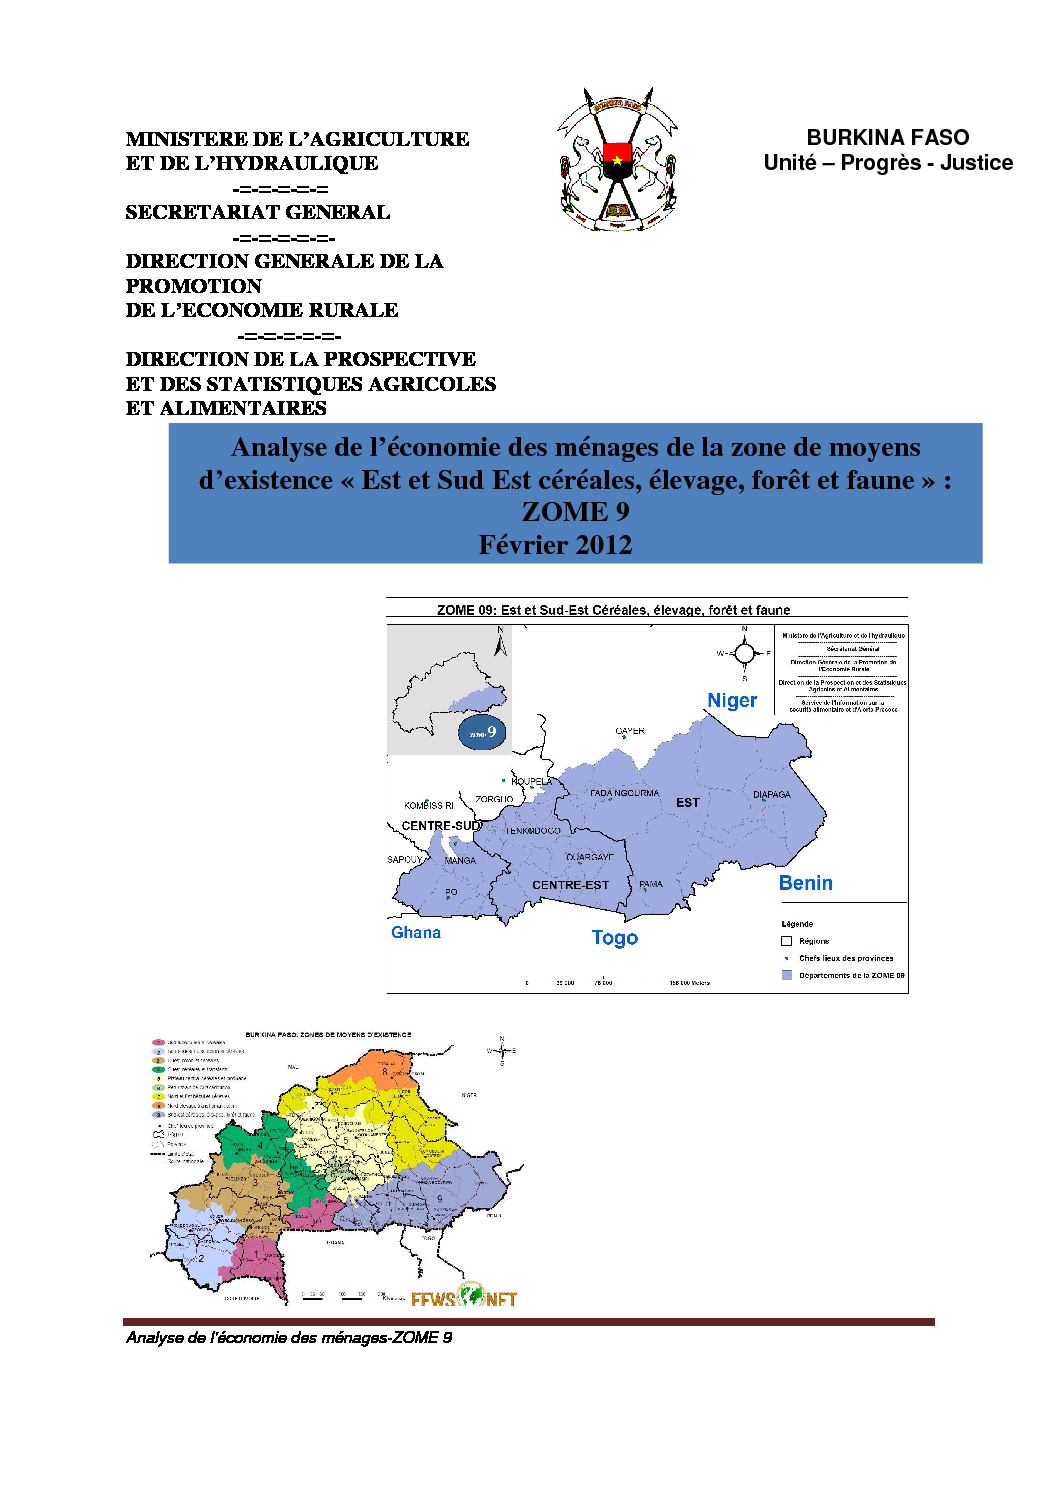 Profil Burkina Faso - ZOME 9 - Fevrier 2012